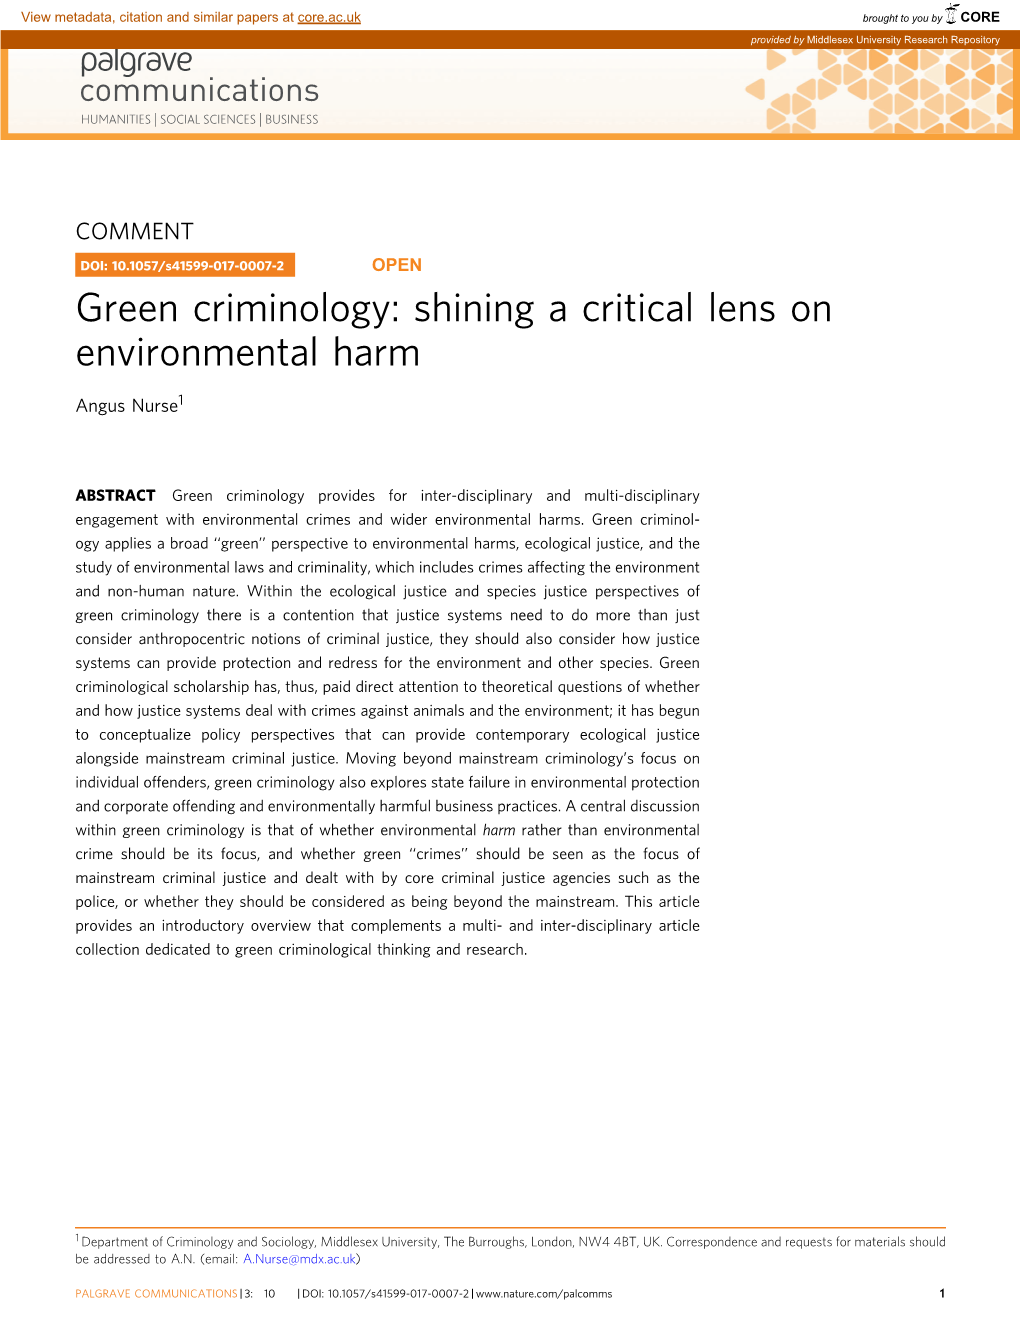 Green Criminology: Shining a Critical Lens on Environmental Harm